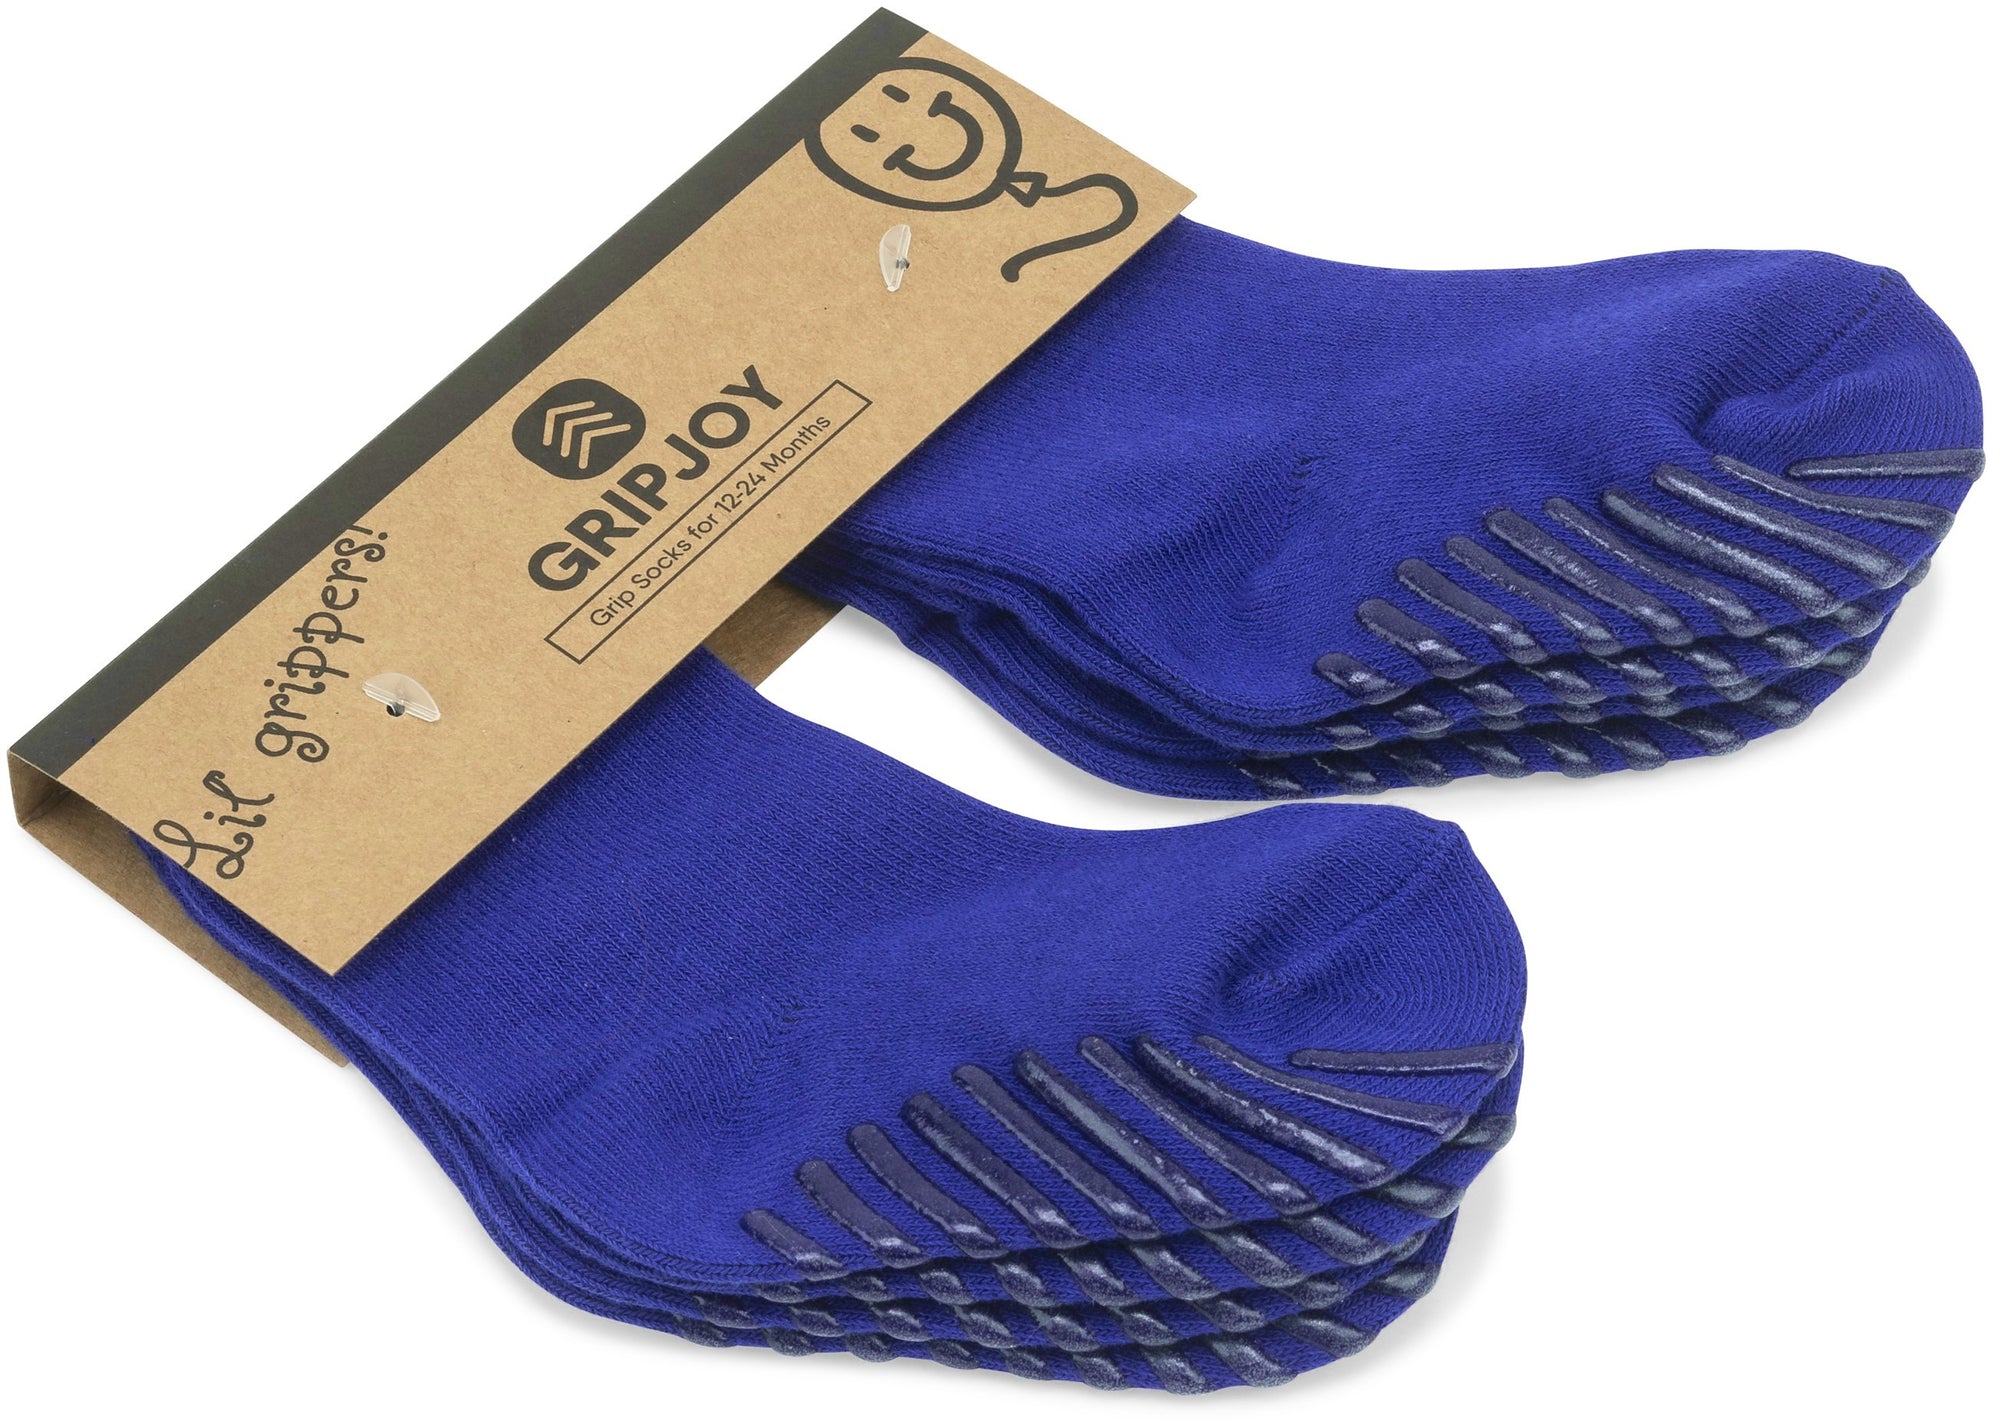 Blue/Black/Grey Grip Socks for Toddlers & Kids - 4 pairs - Gripjoy